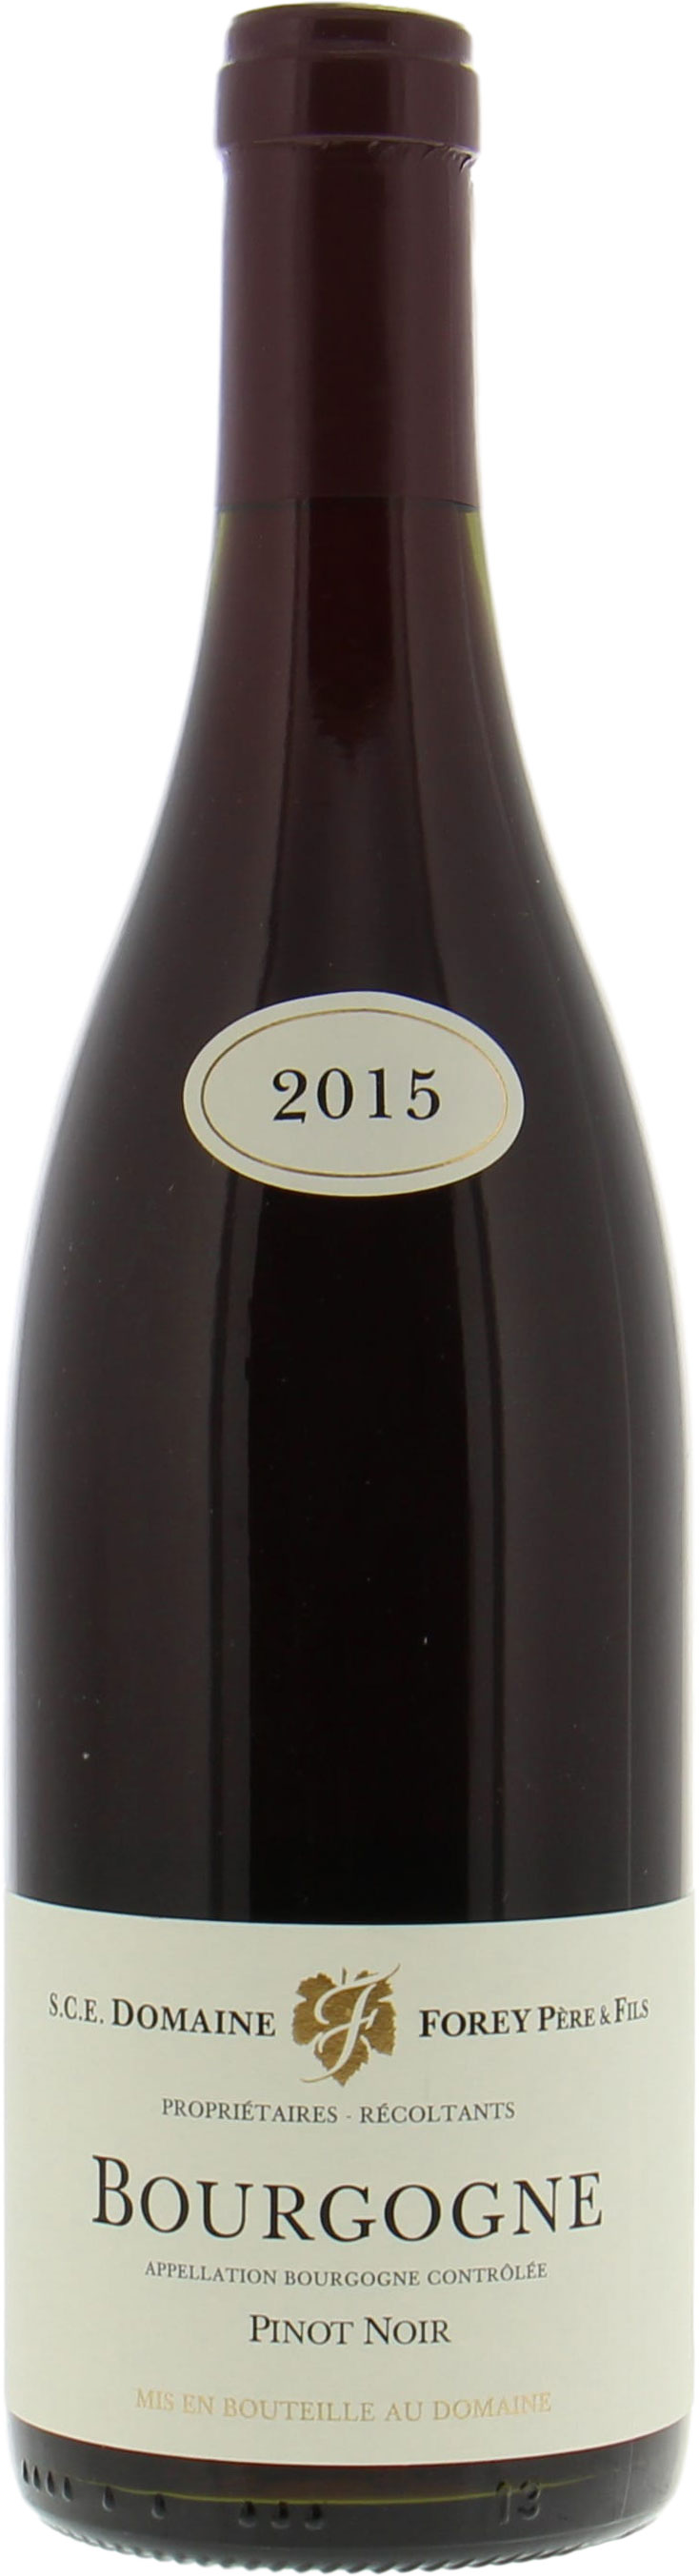 Domaine Forey Pere & Fils - Bourgogne Pinot Noir 2015